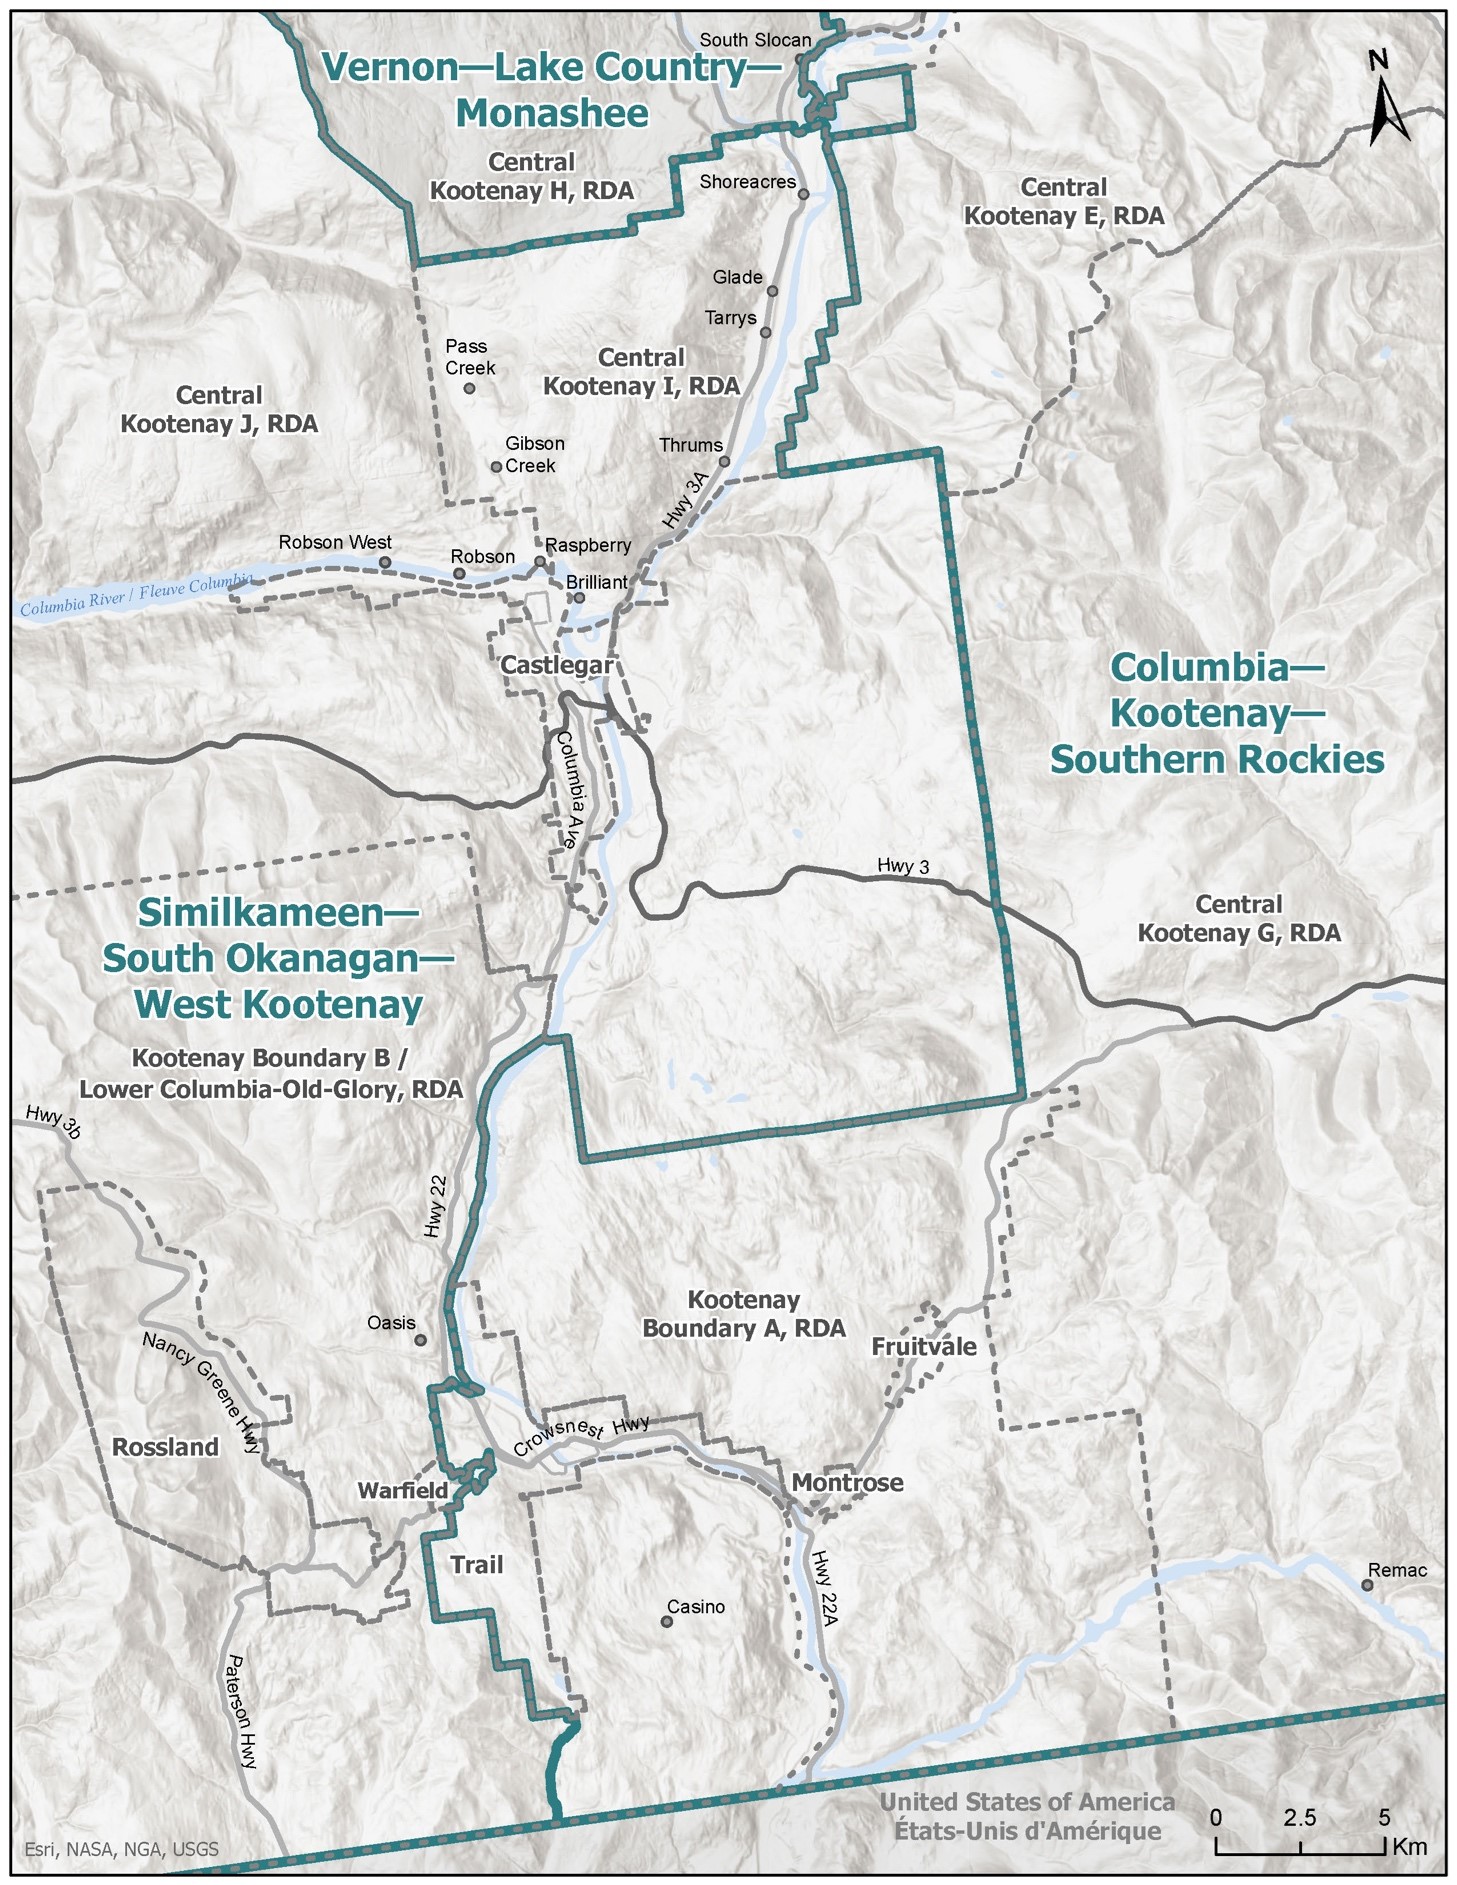 Modified boundaries of Columbia—Kootenay—Southern Rockies and Similkameen—South Okanagan—West Kootenay